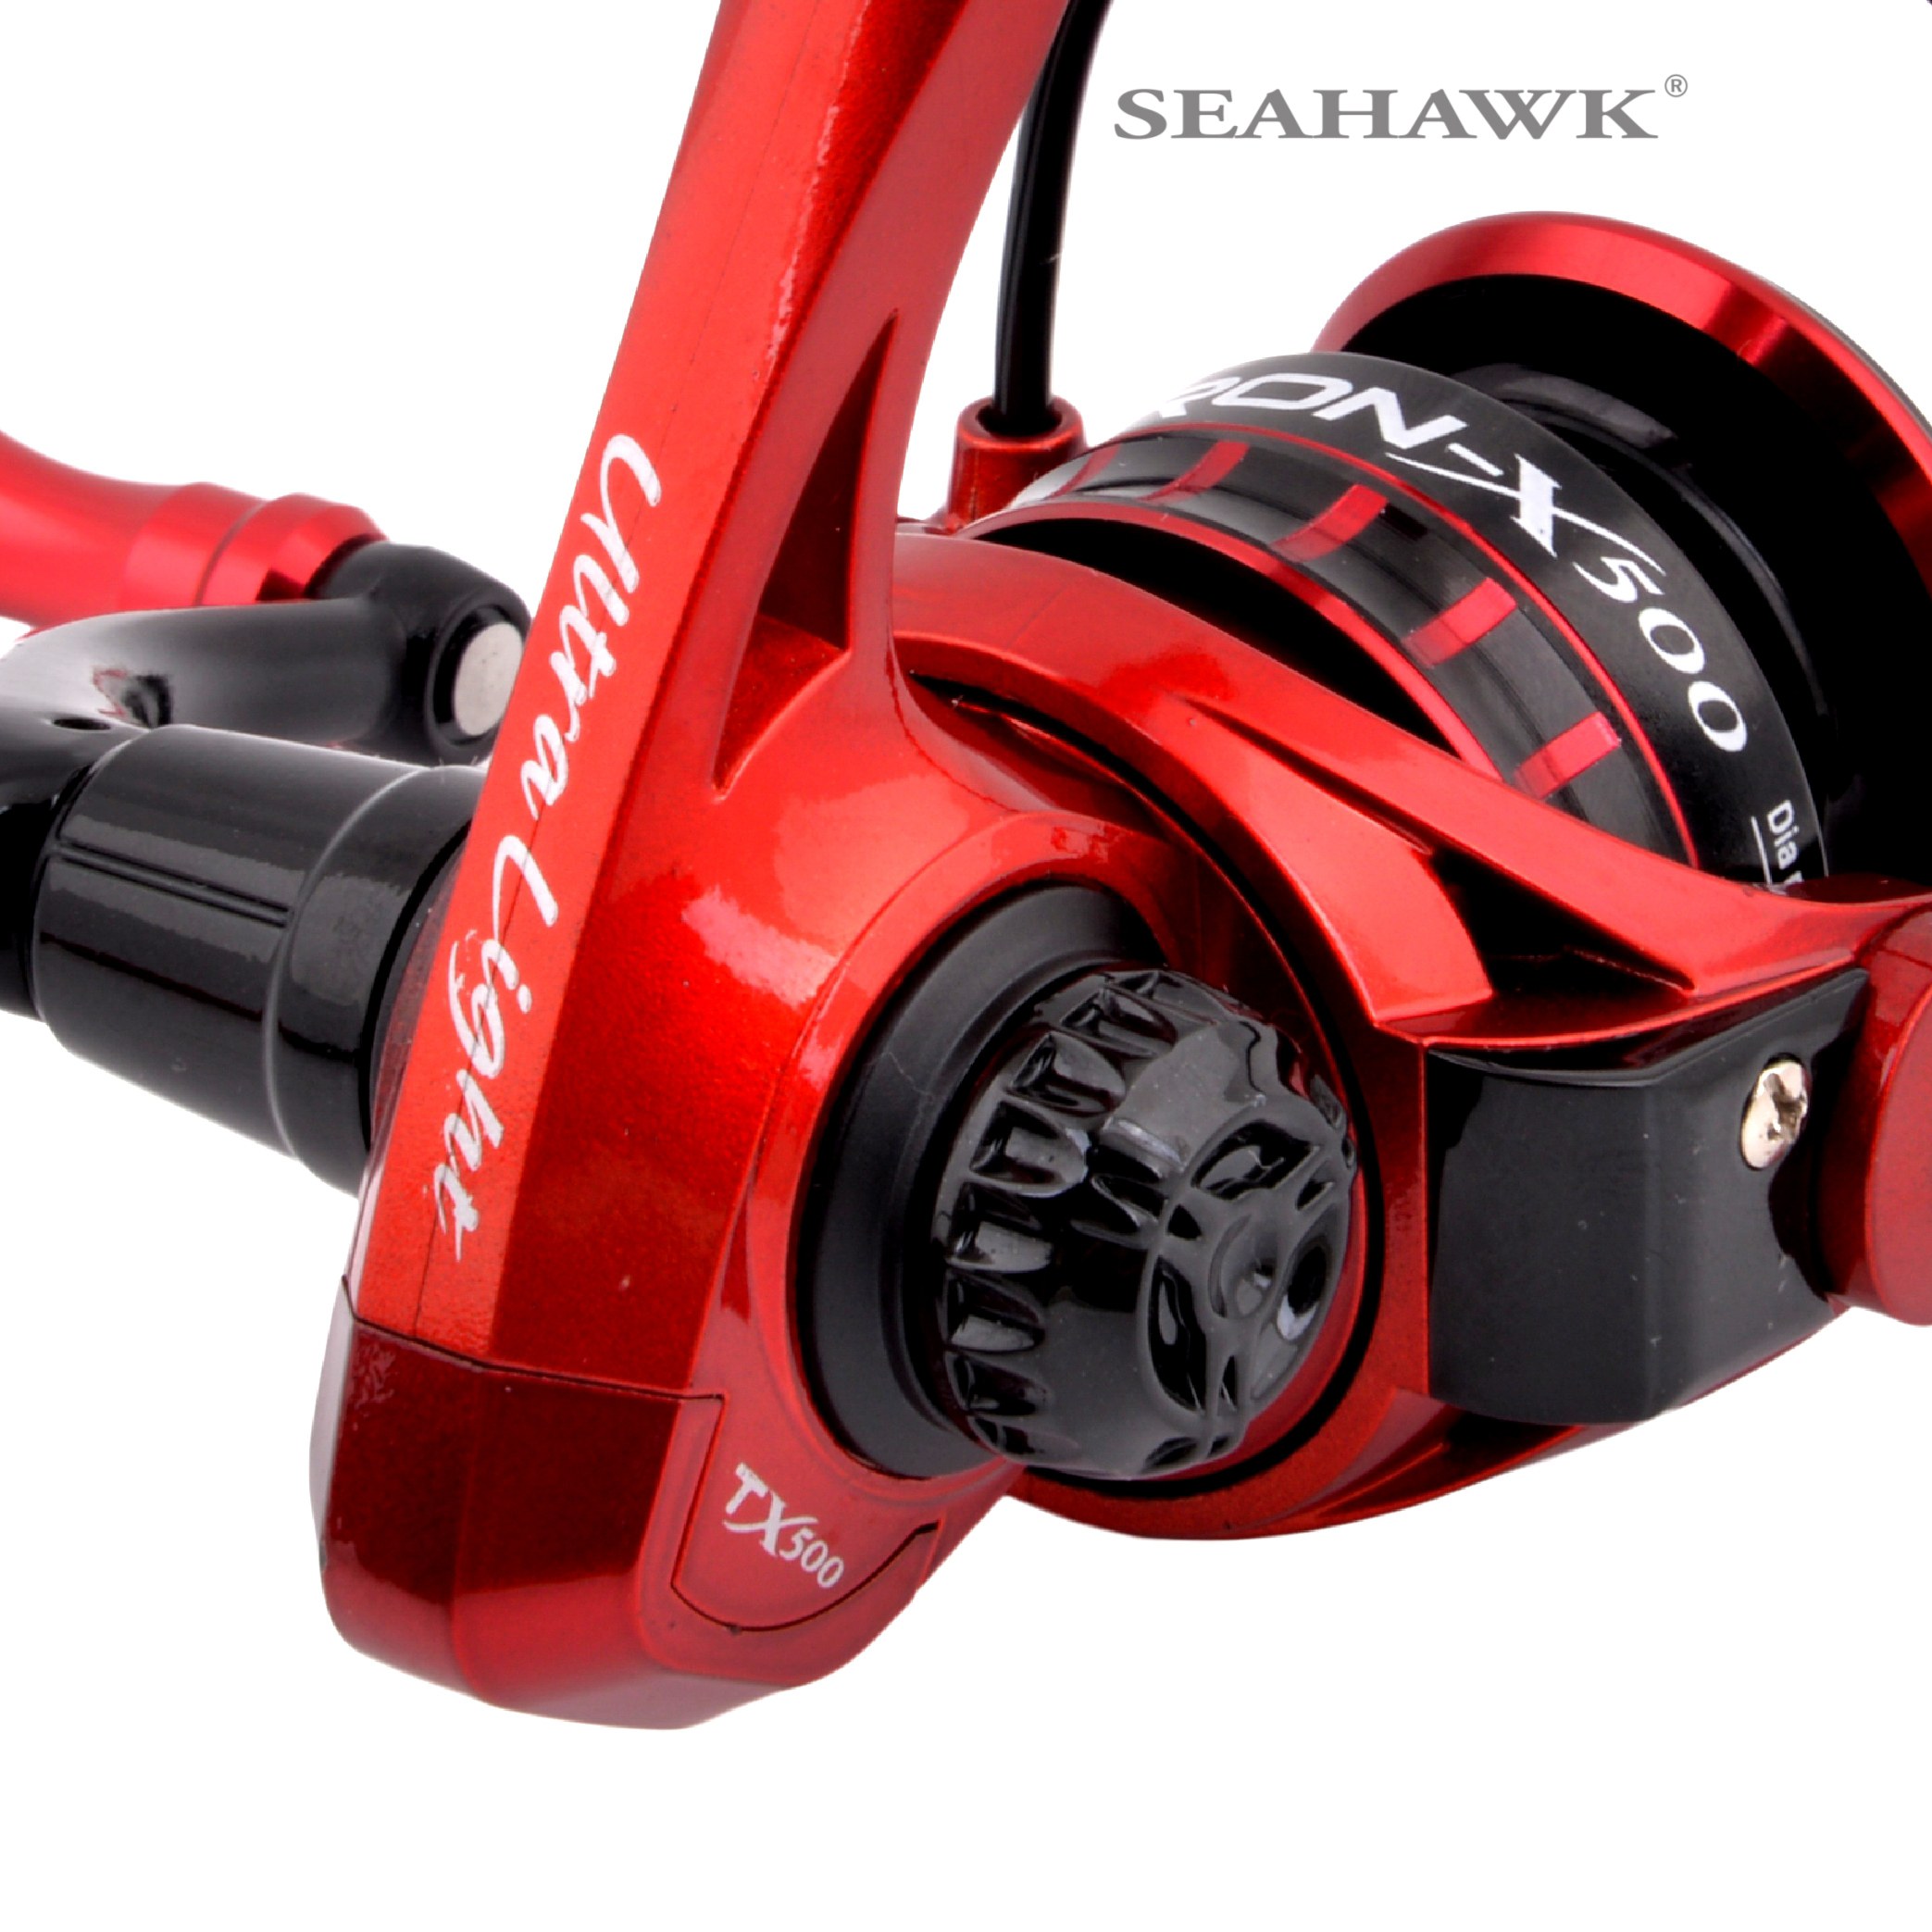 Seahawk Tron X TX 06